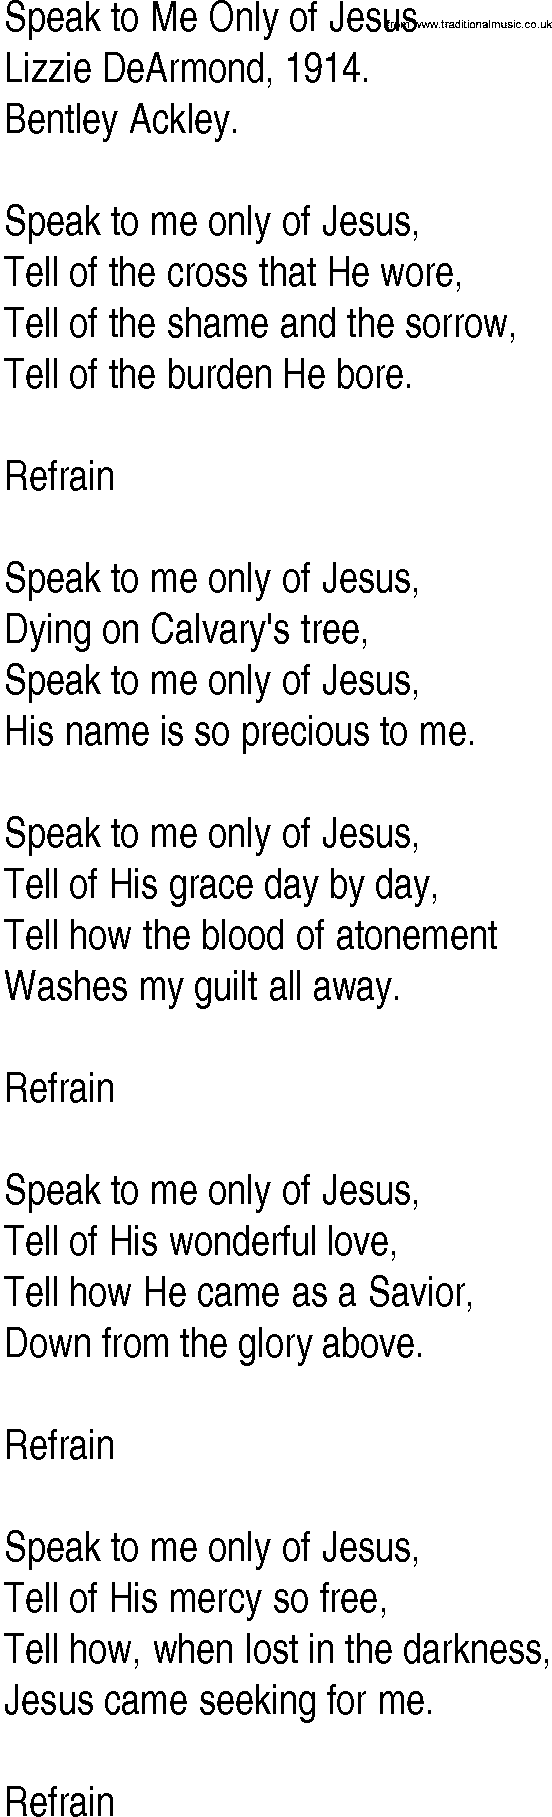 Hymn and Gospel Song: Speak to Me Only of Jesus by Lizzie DeArmond lyrics